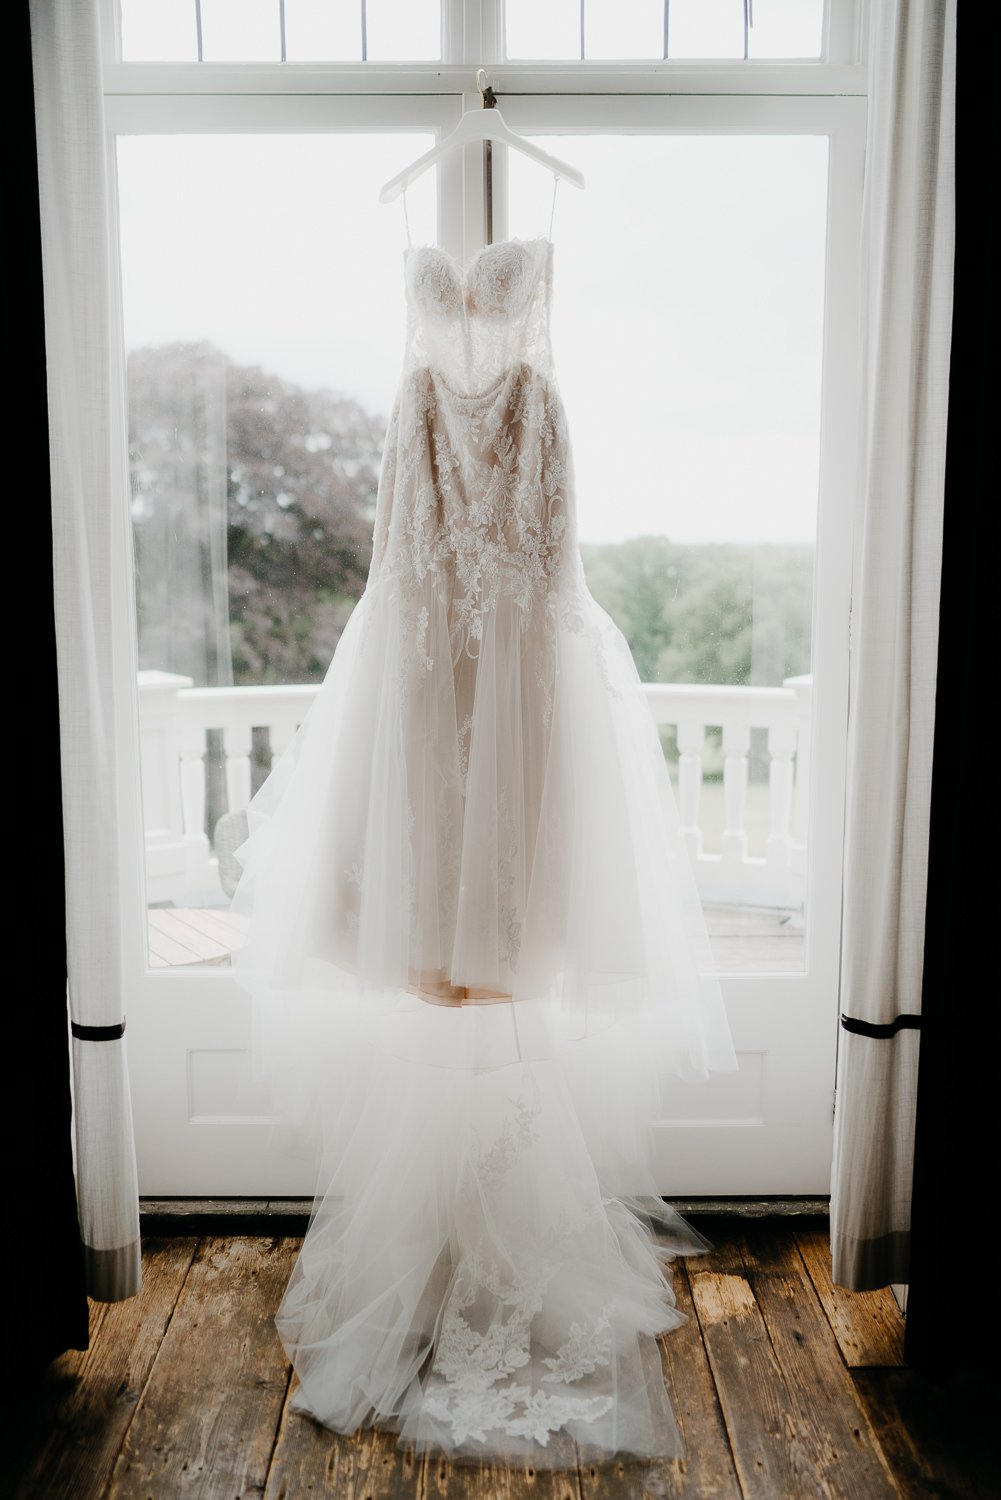 Brides Dress Trouwjurk at Arnhem Wedding Photographed by Mark Hadden Amsterdam Wedding Photographer